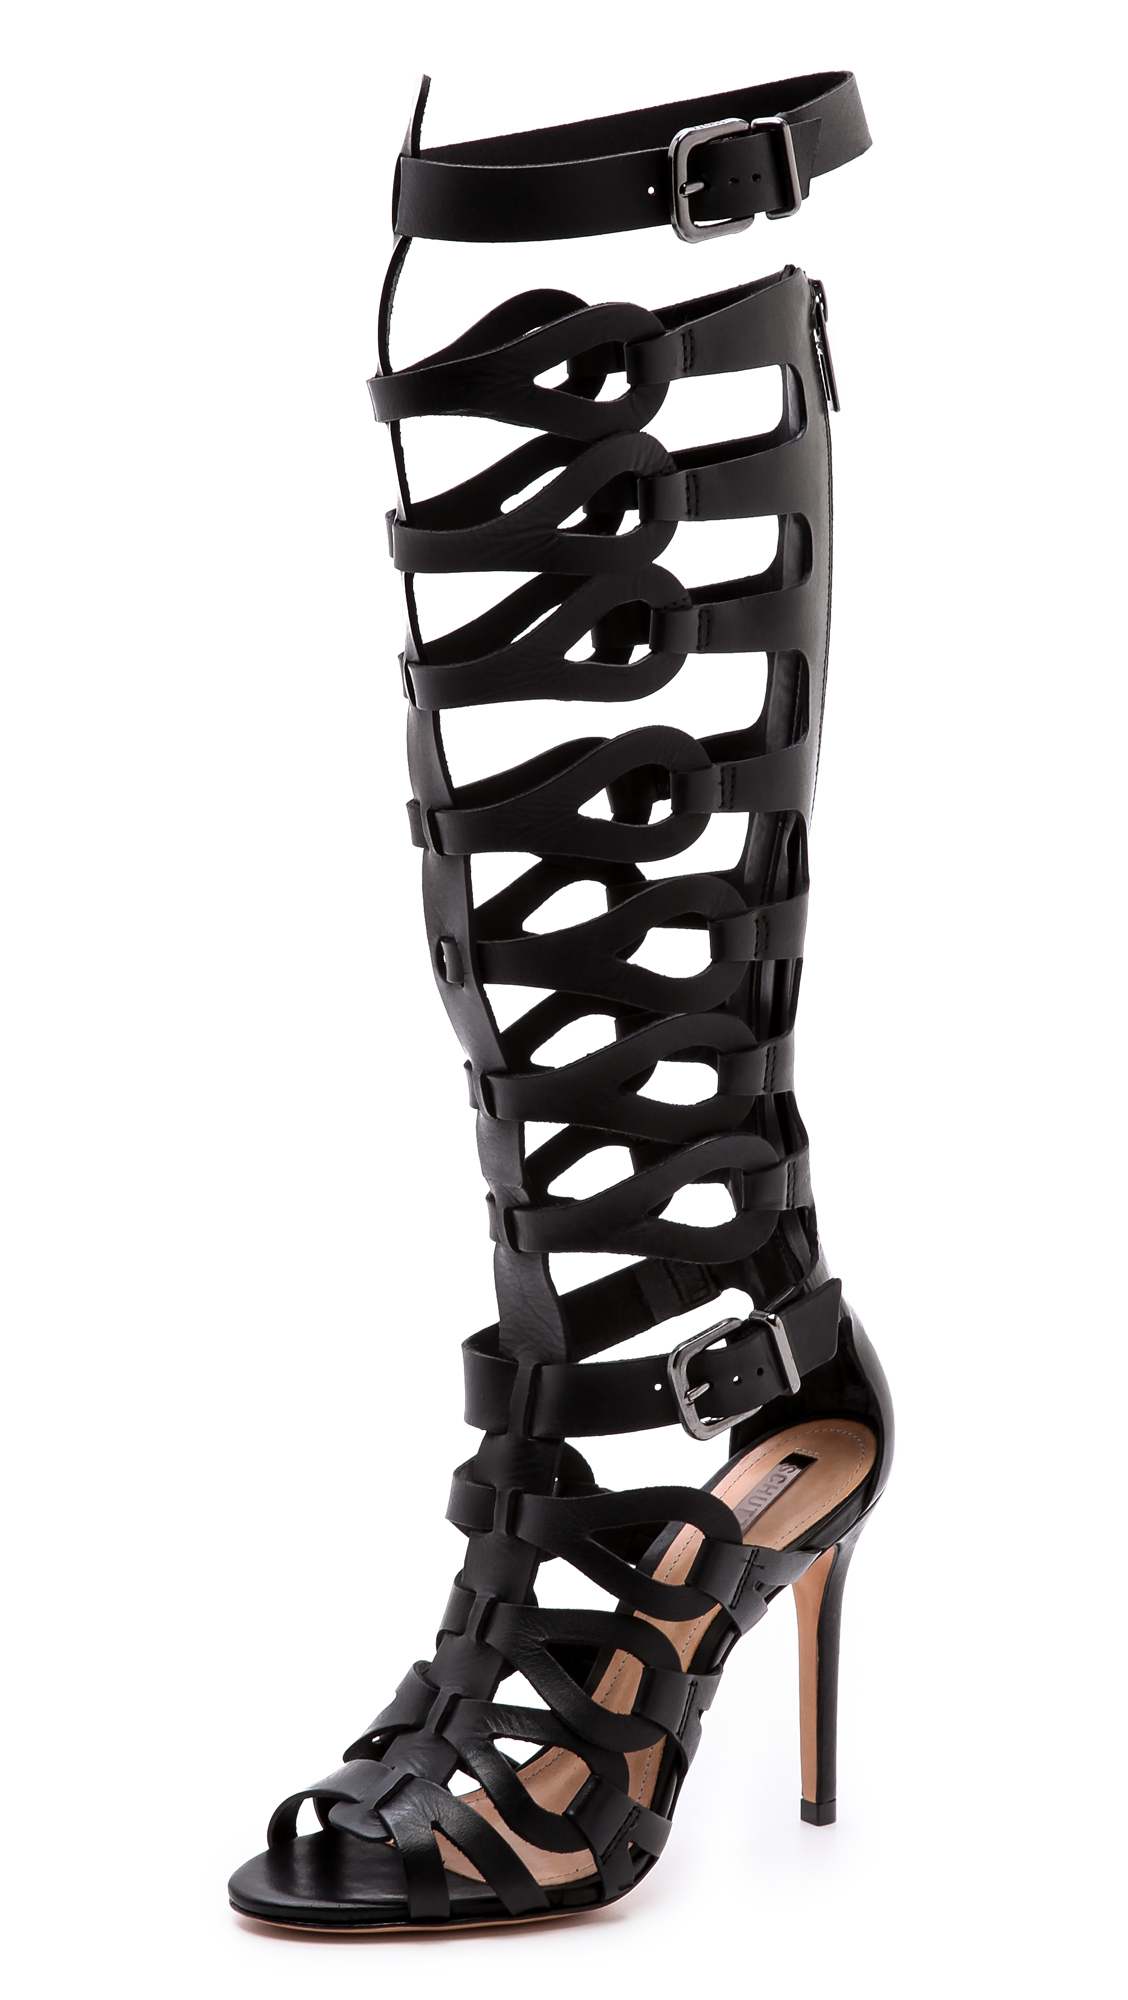 Lyst - Schutz Eirini Cutout Tall Gladiator Sandals in Black